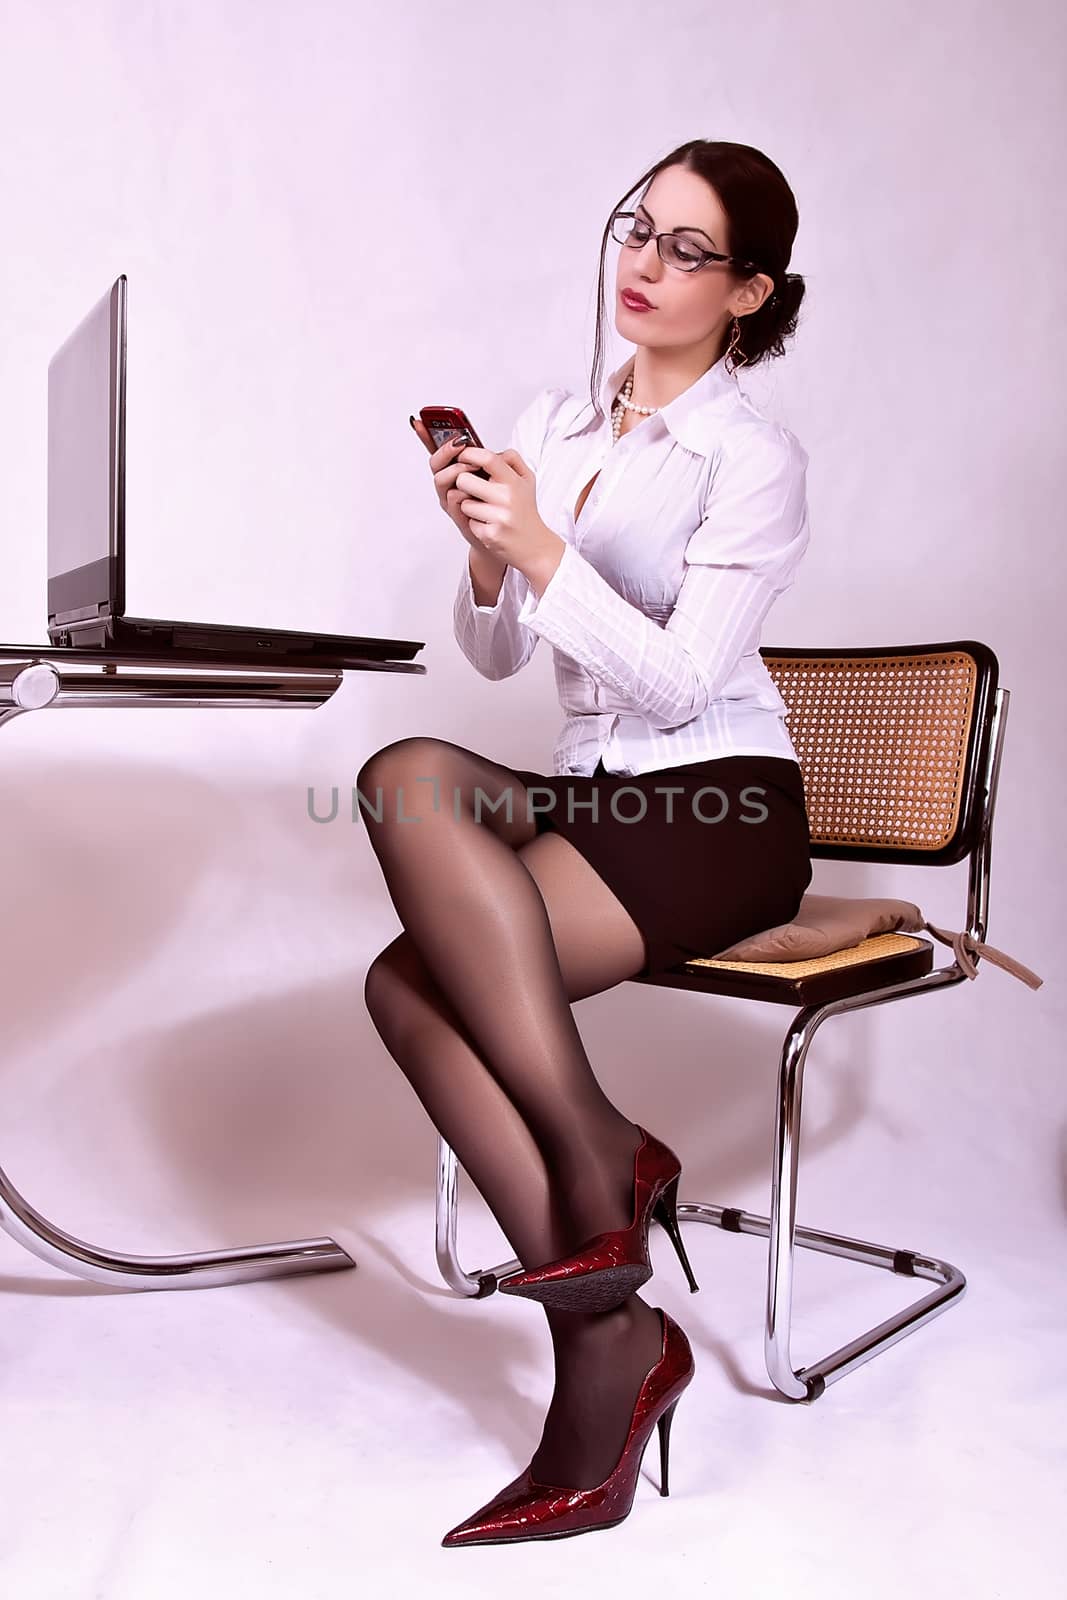 Attractive secretary sitting at desk by dukibu